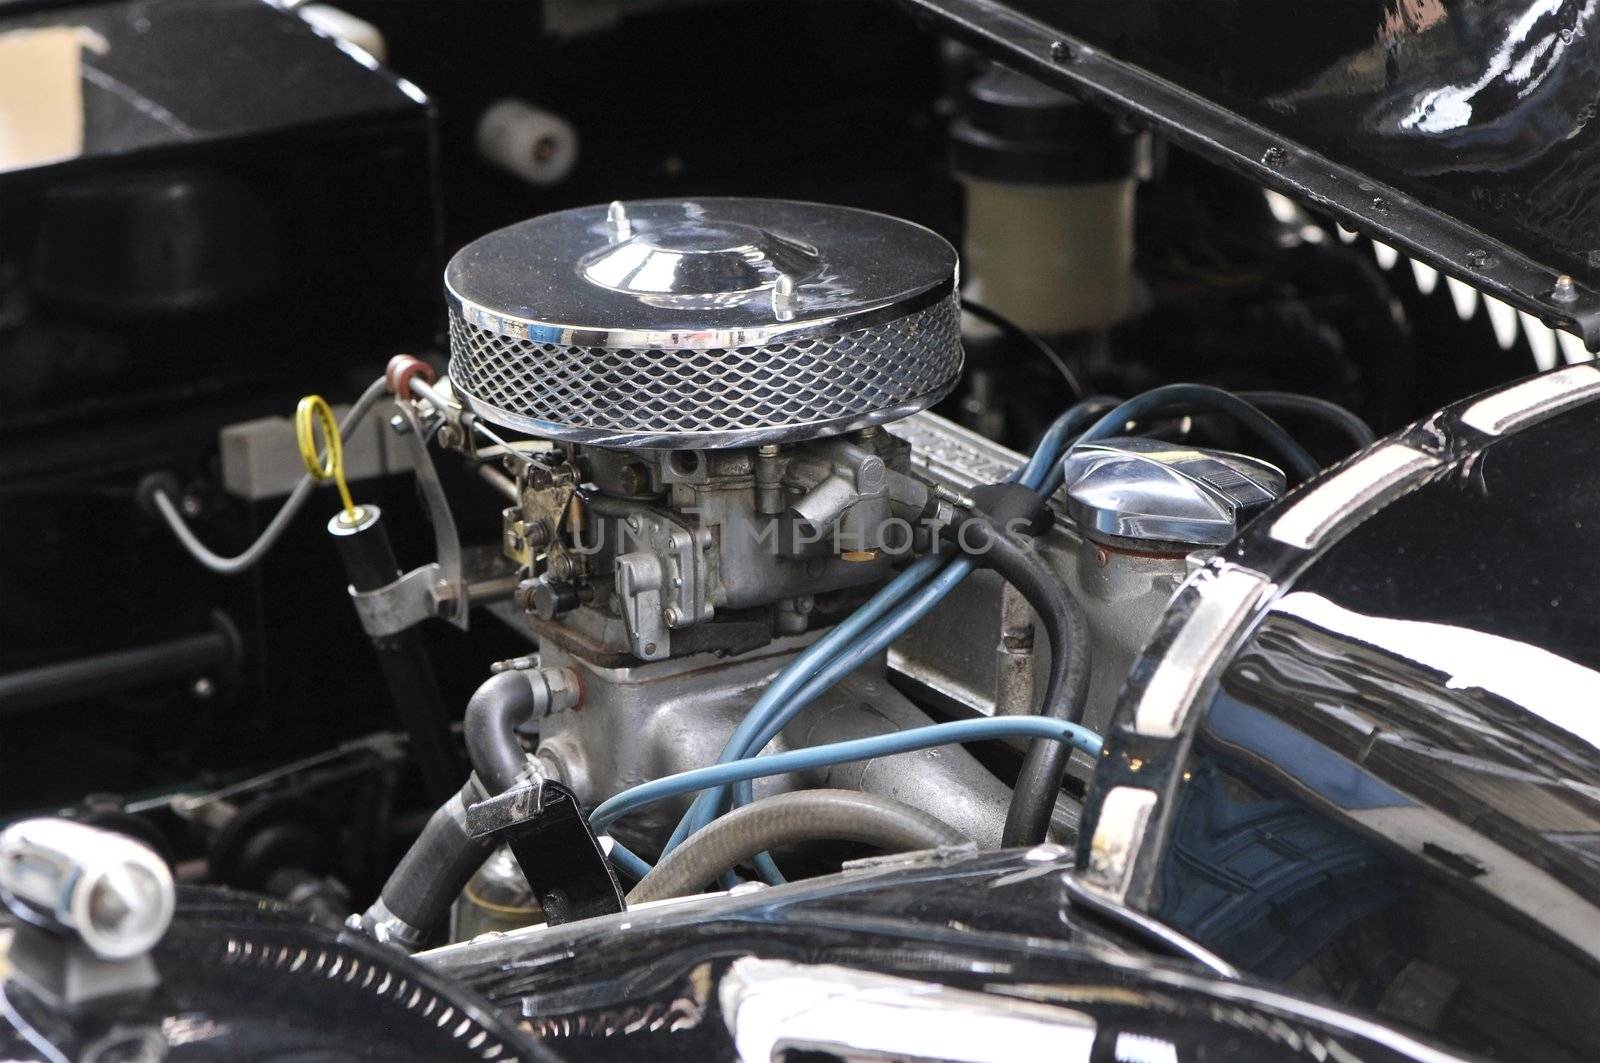 Chromed motor of an old black Morgan car